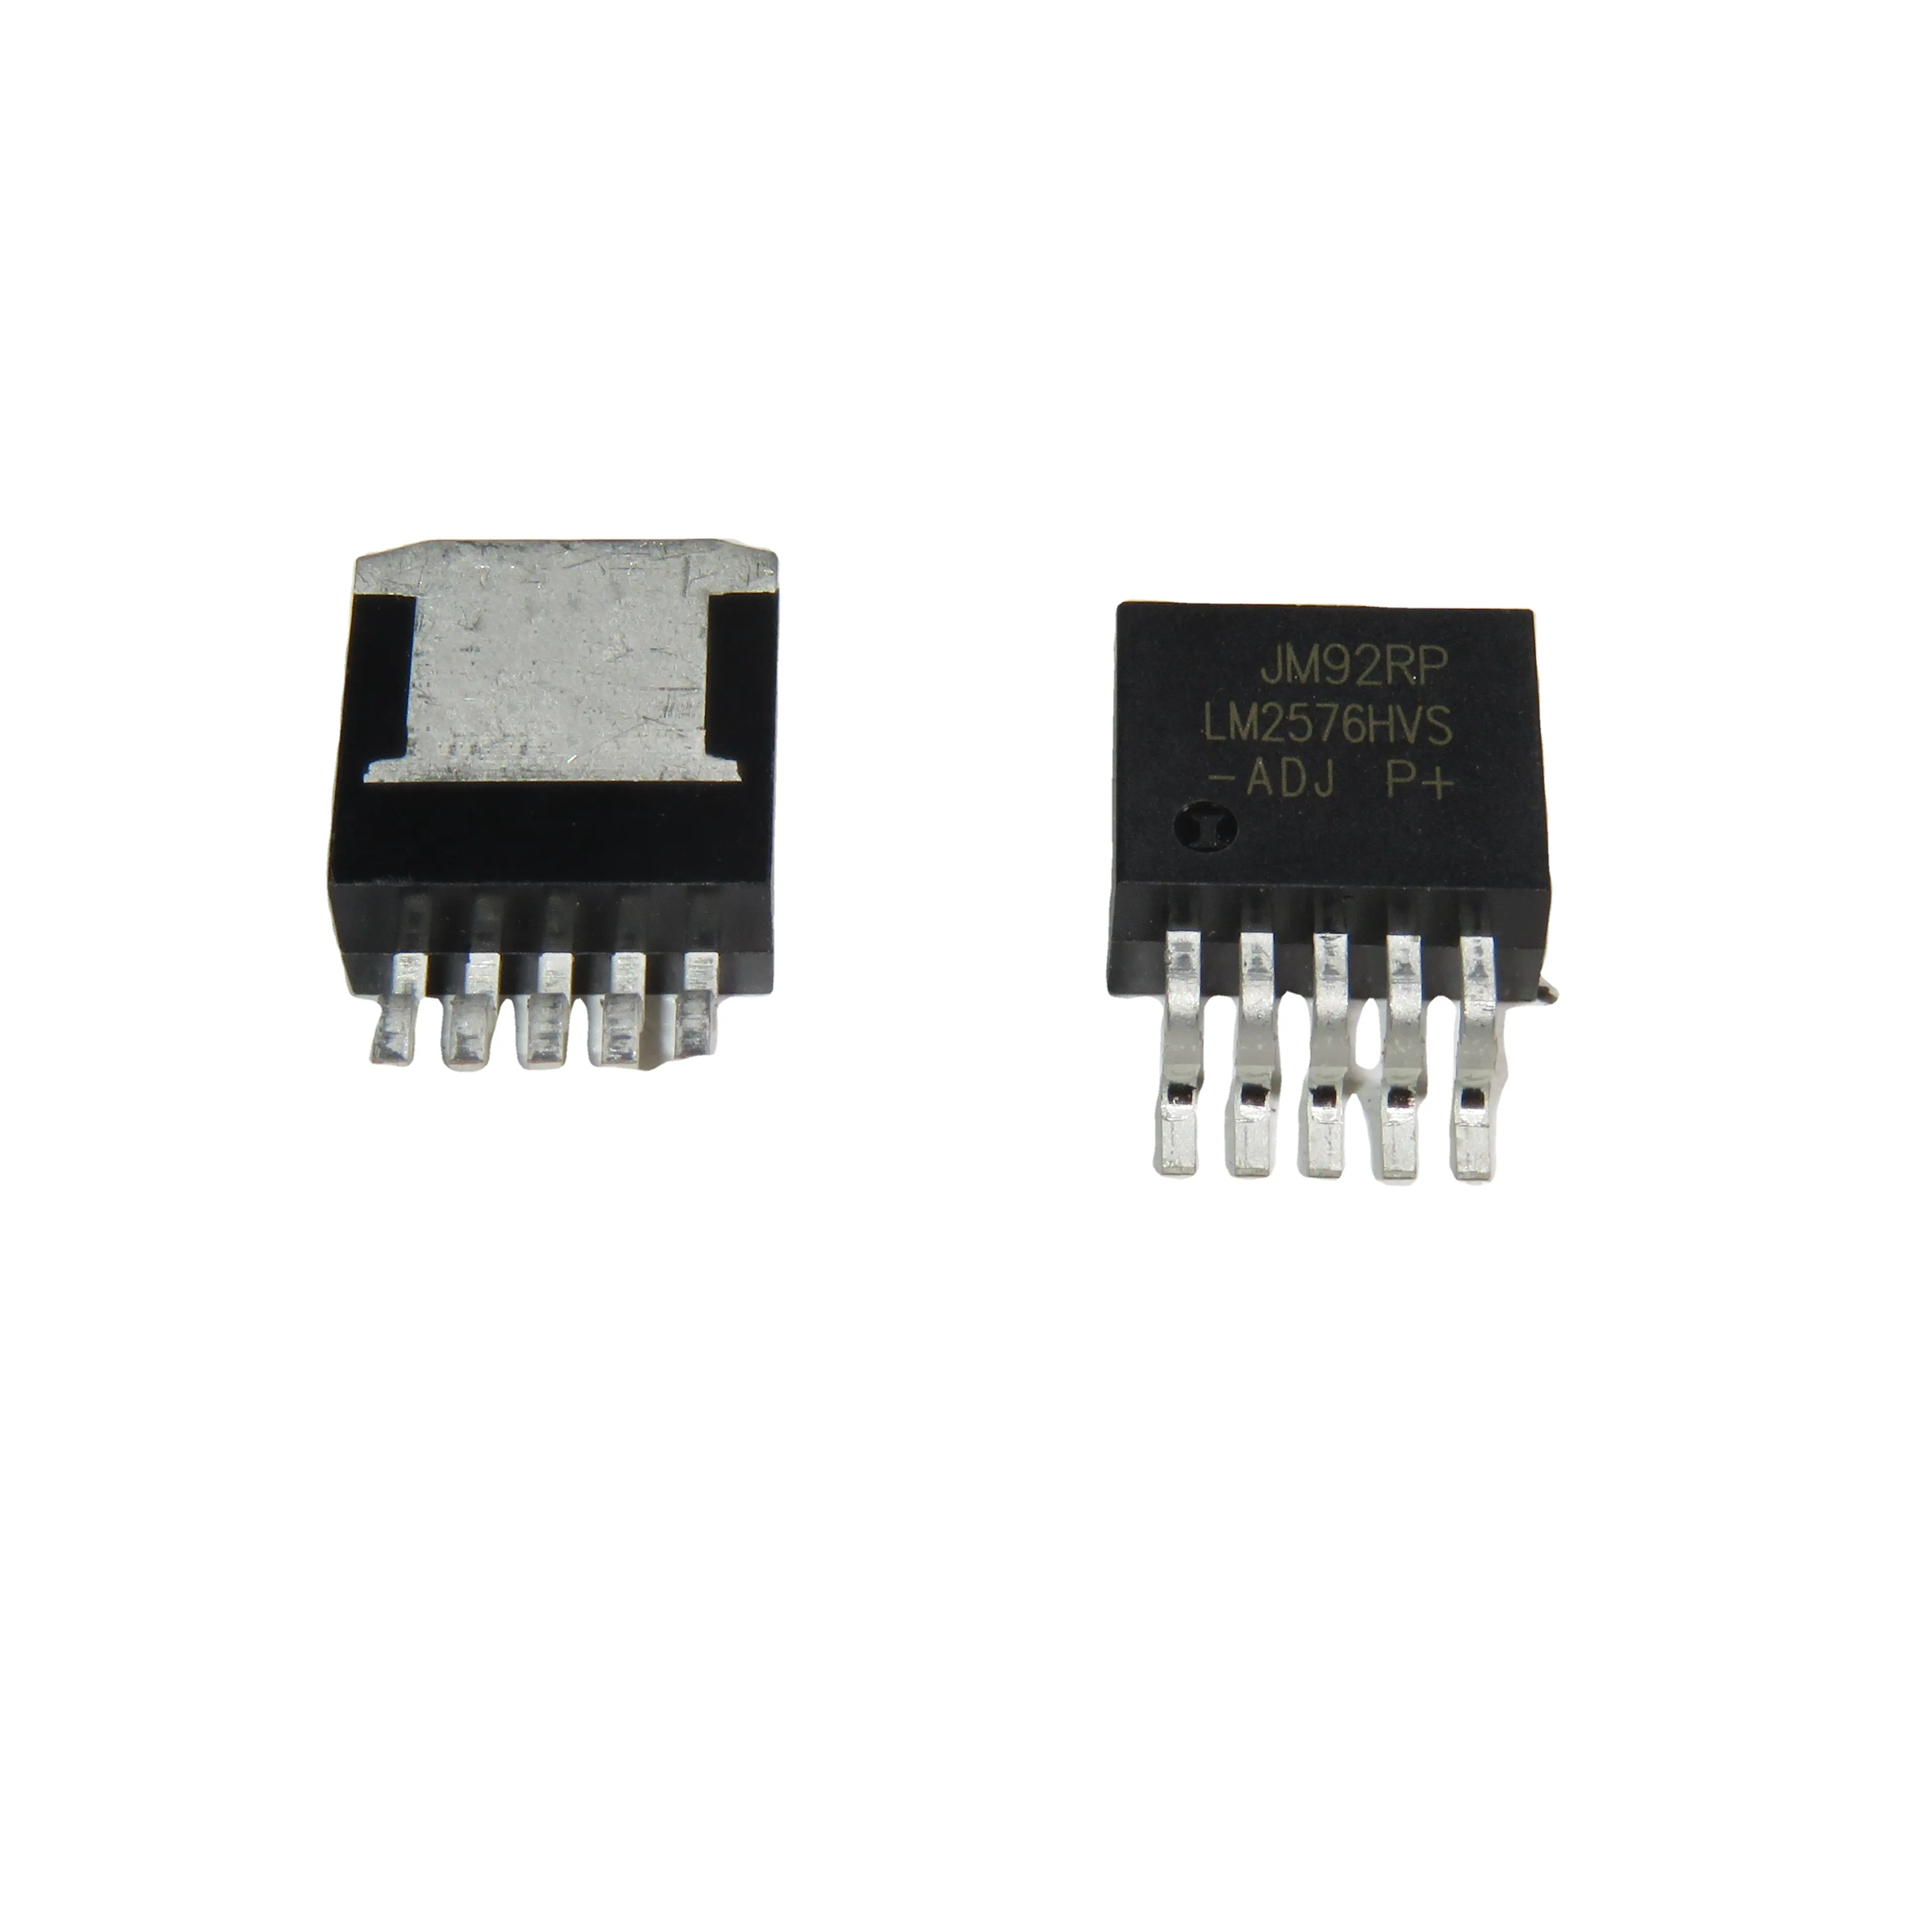 Julixin high quality ic chips LM2576HVS